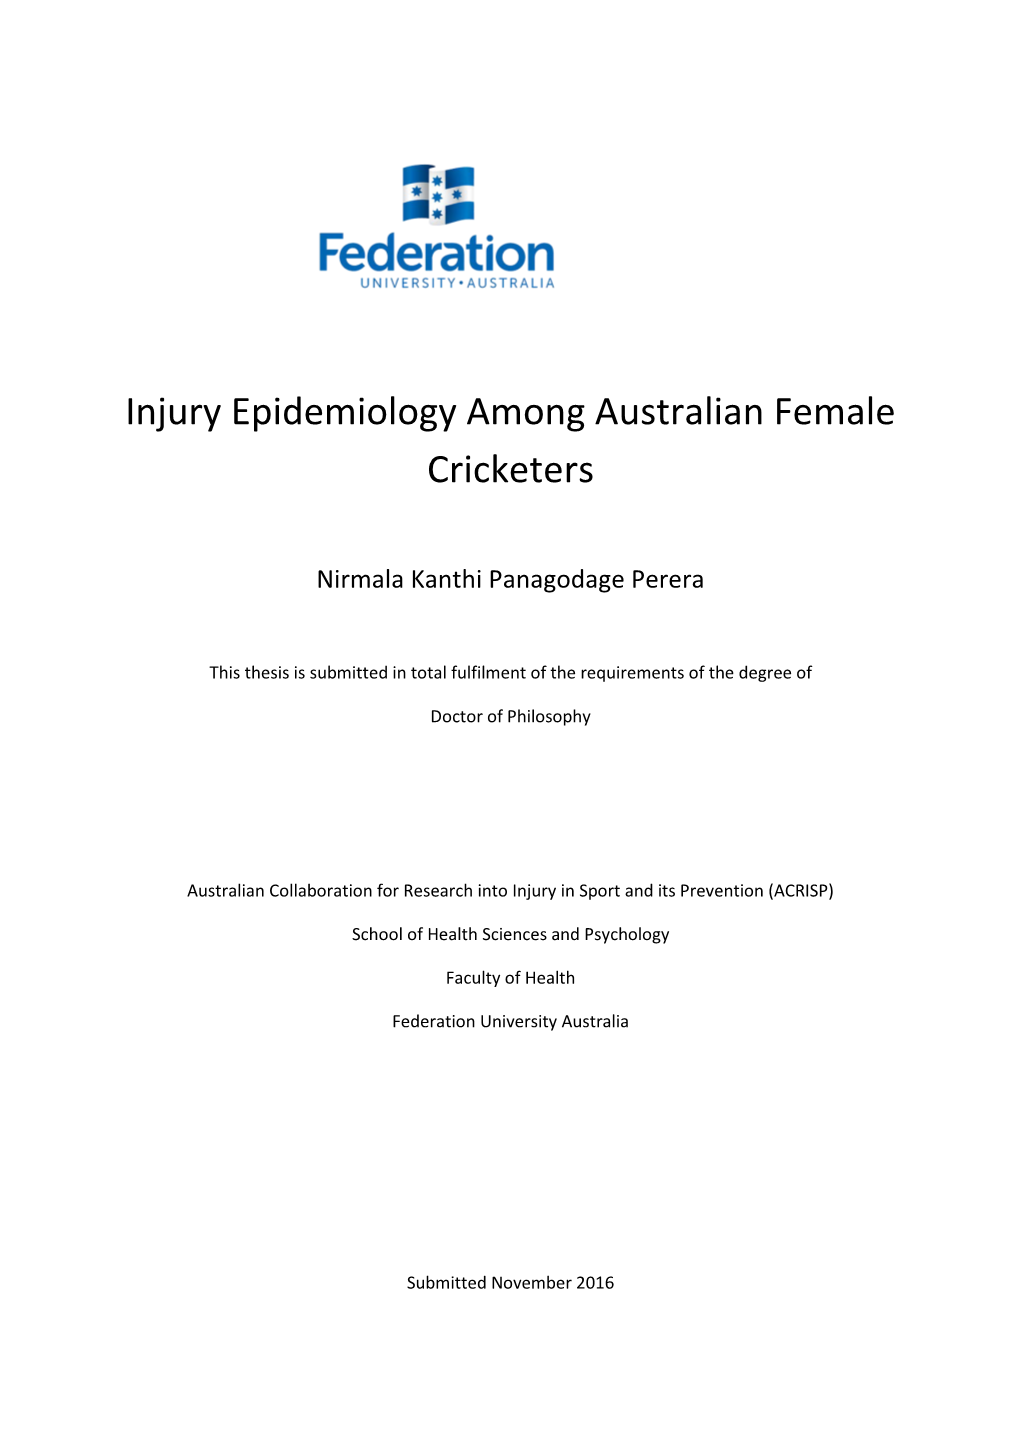 Injury Epidemiology Among Australian Female Cricketers